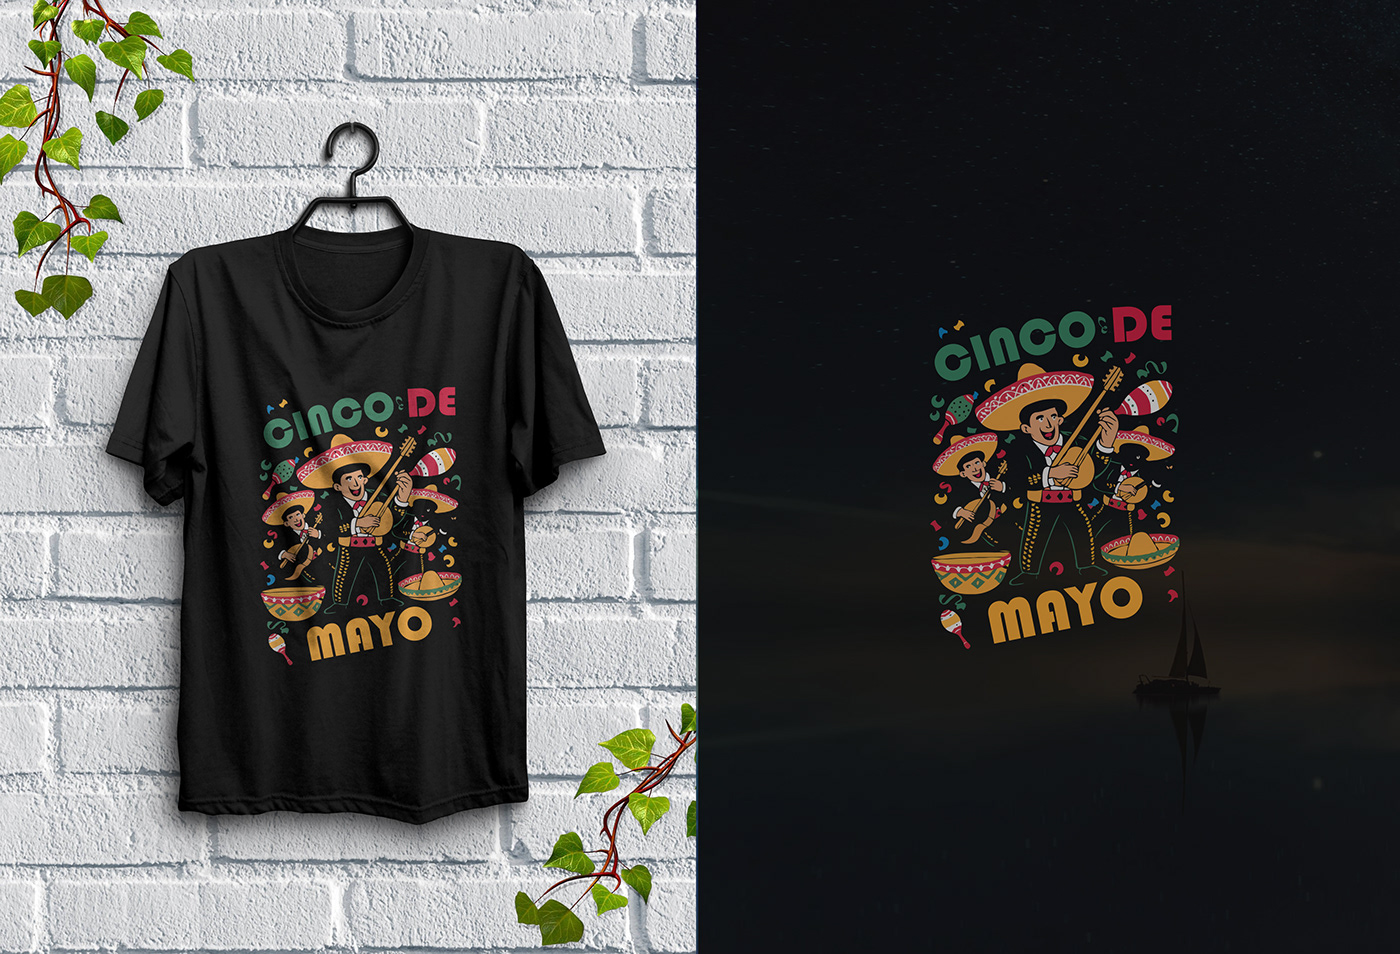 "CINO DE MIYO" T-shirt design template.